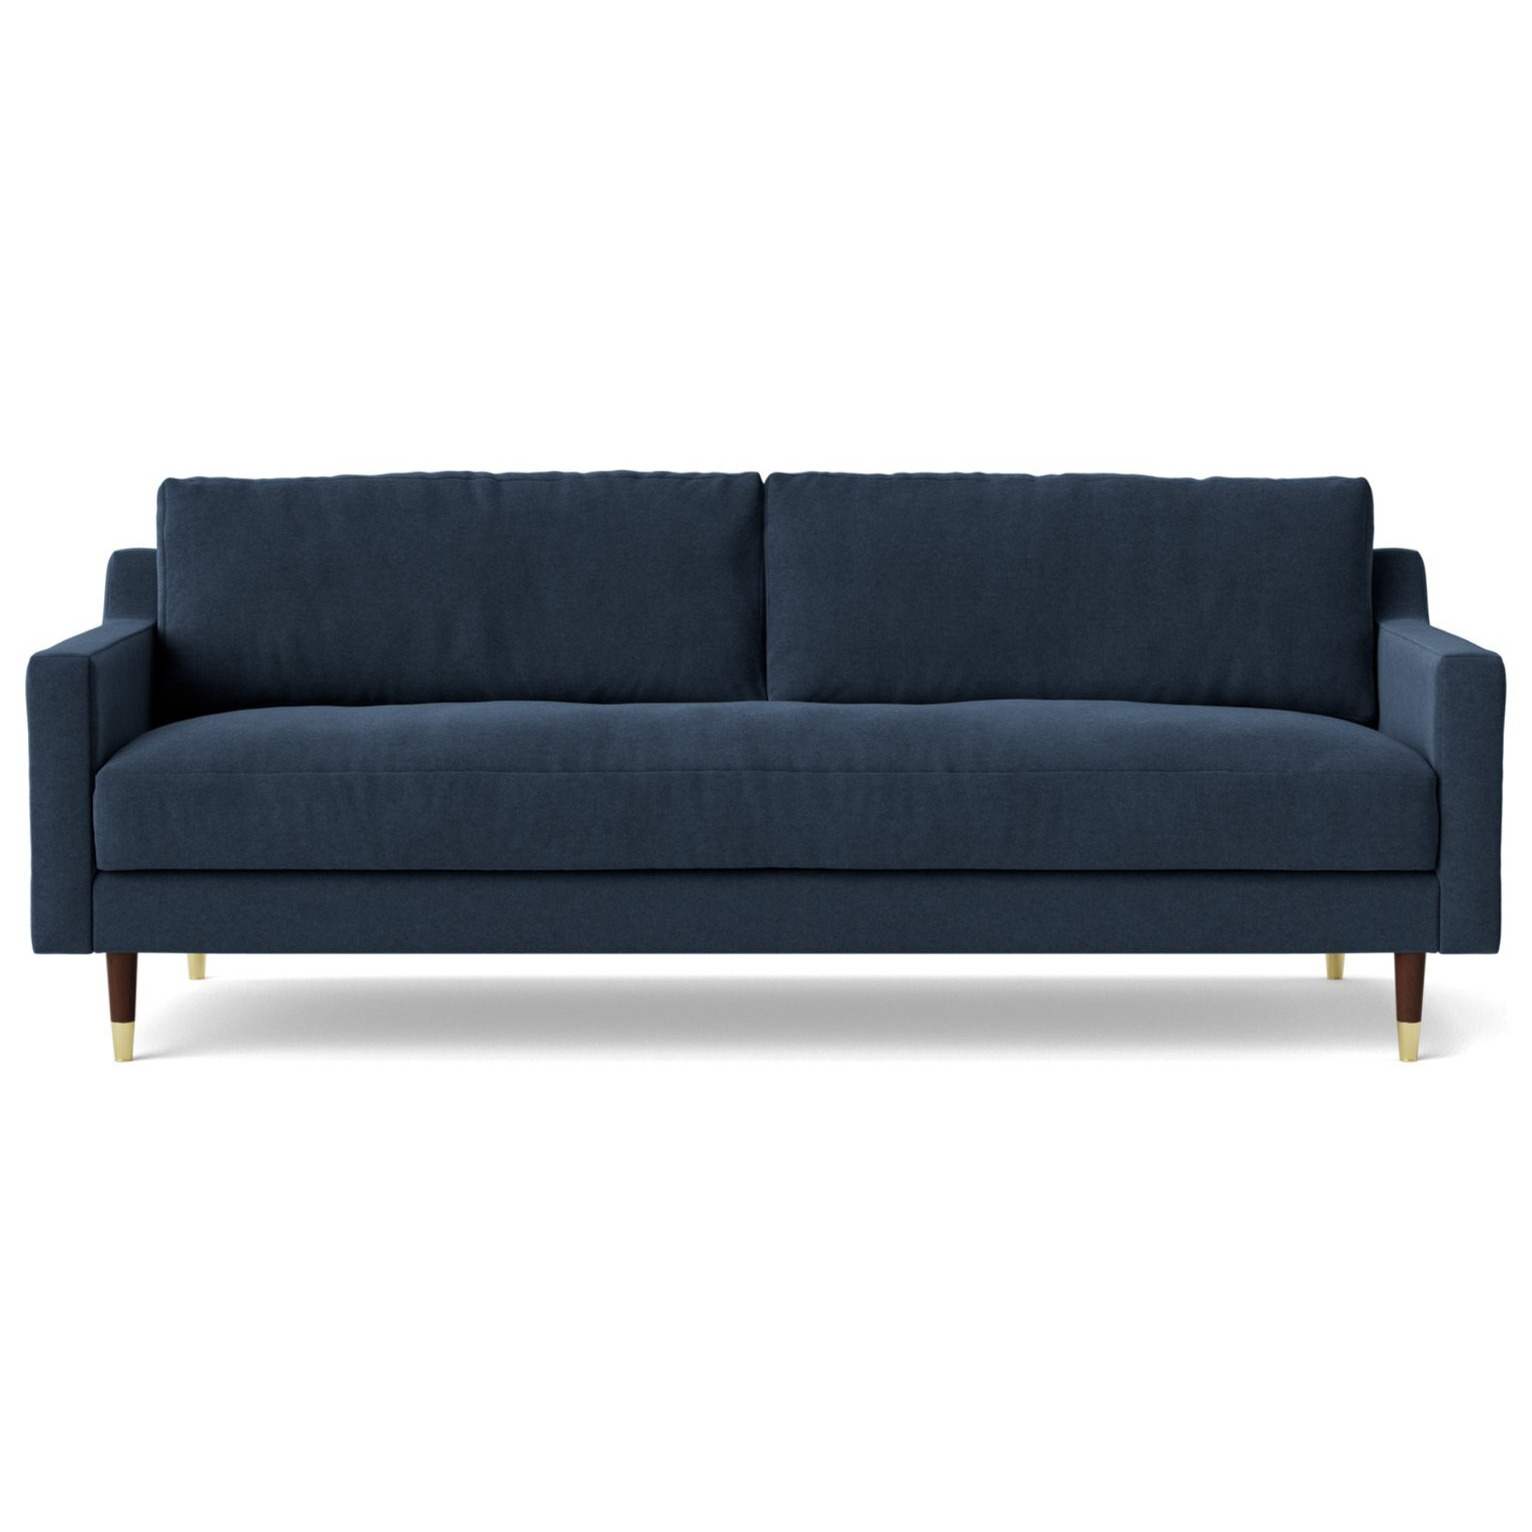 Swoon Rieti Fabric 3 Seater Sofa - Indigo Blue - image 1